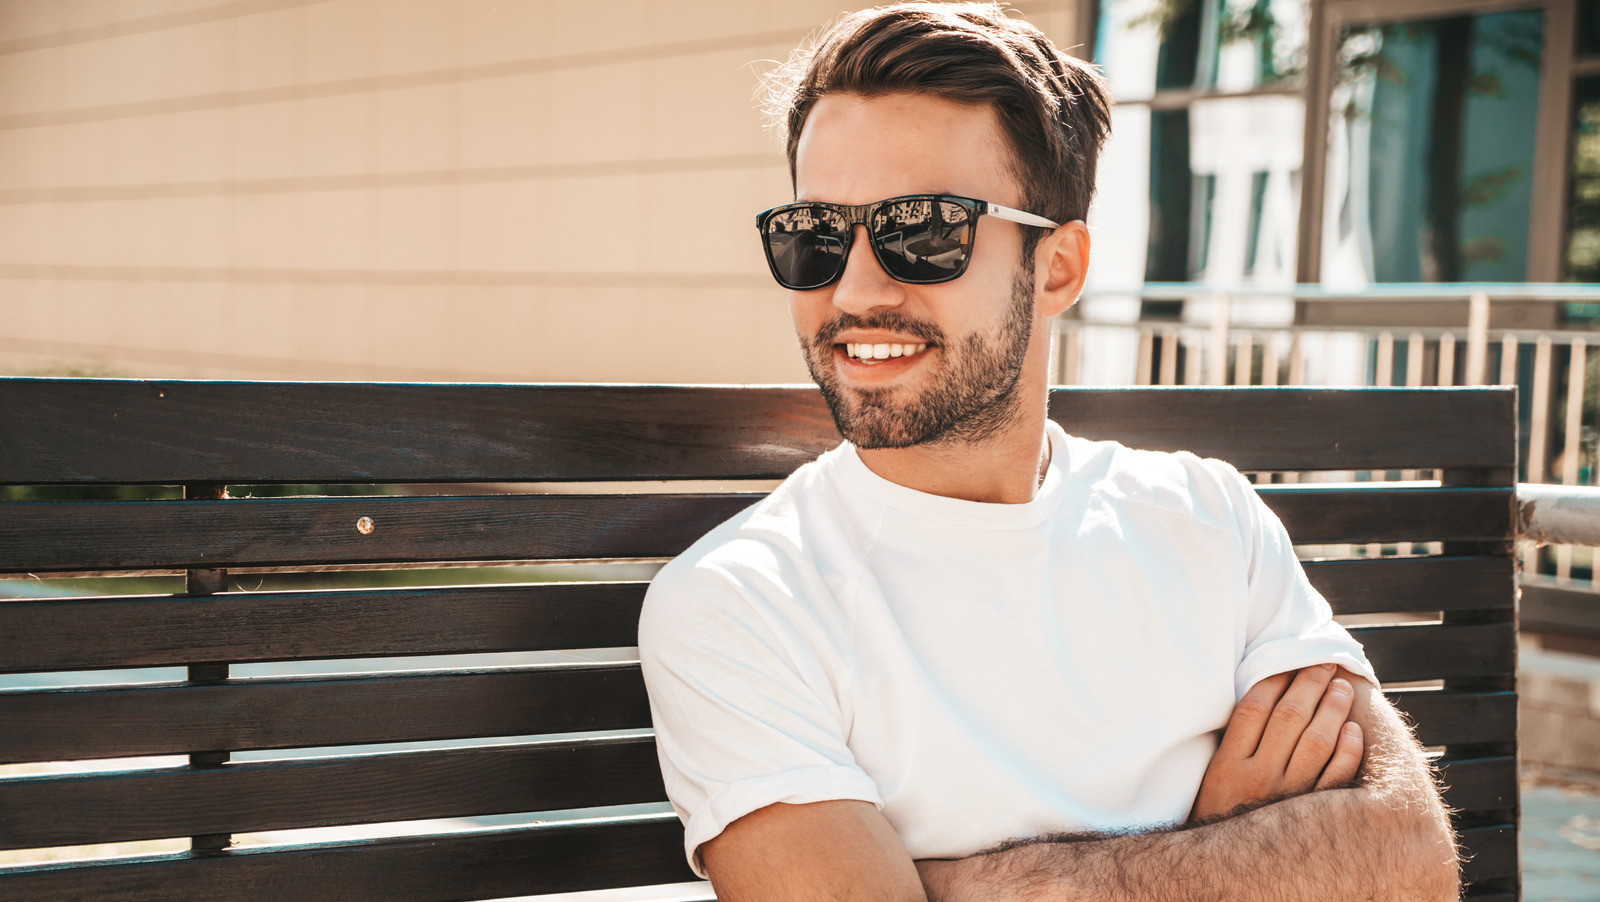 The Trendiest Sunglasses For Men In 2021